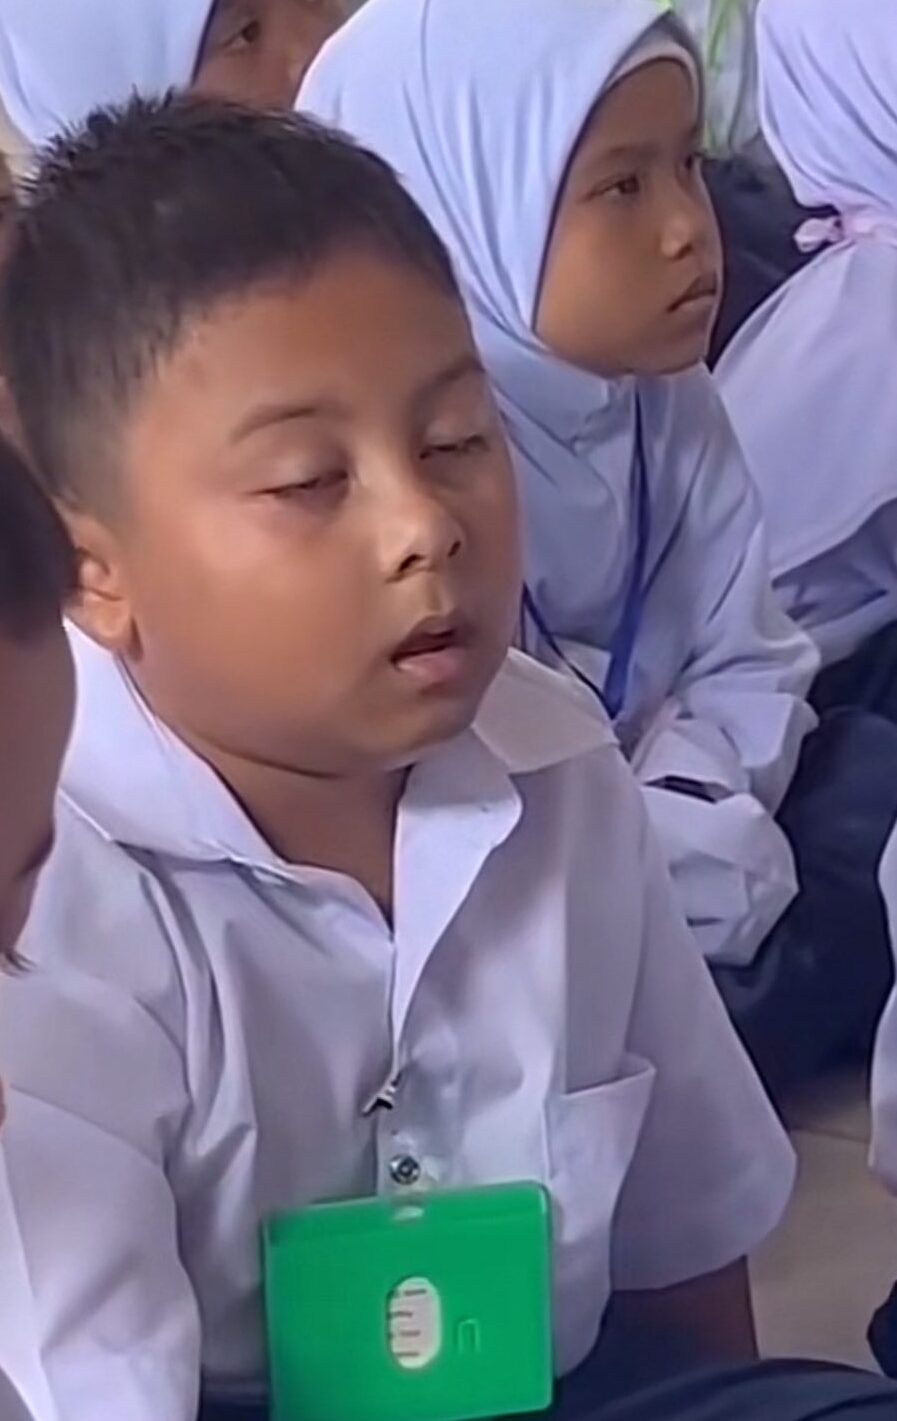 7yo boy falling asleep during assembly